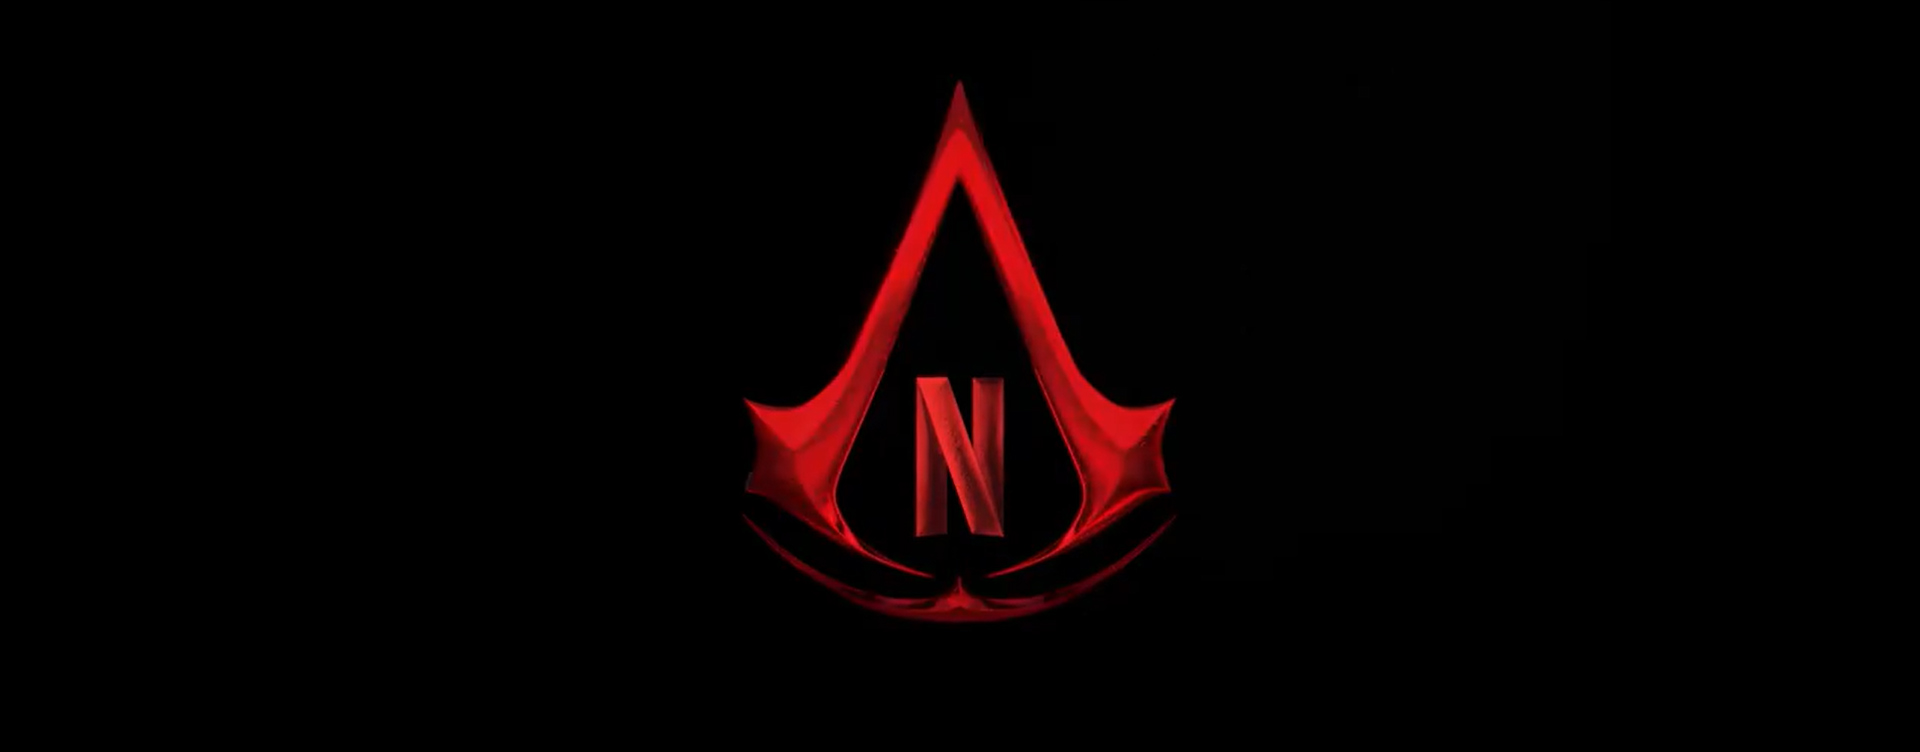 Netflix creating Assassin’s Creed series